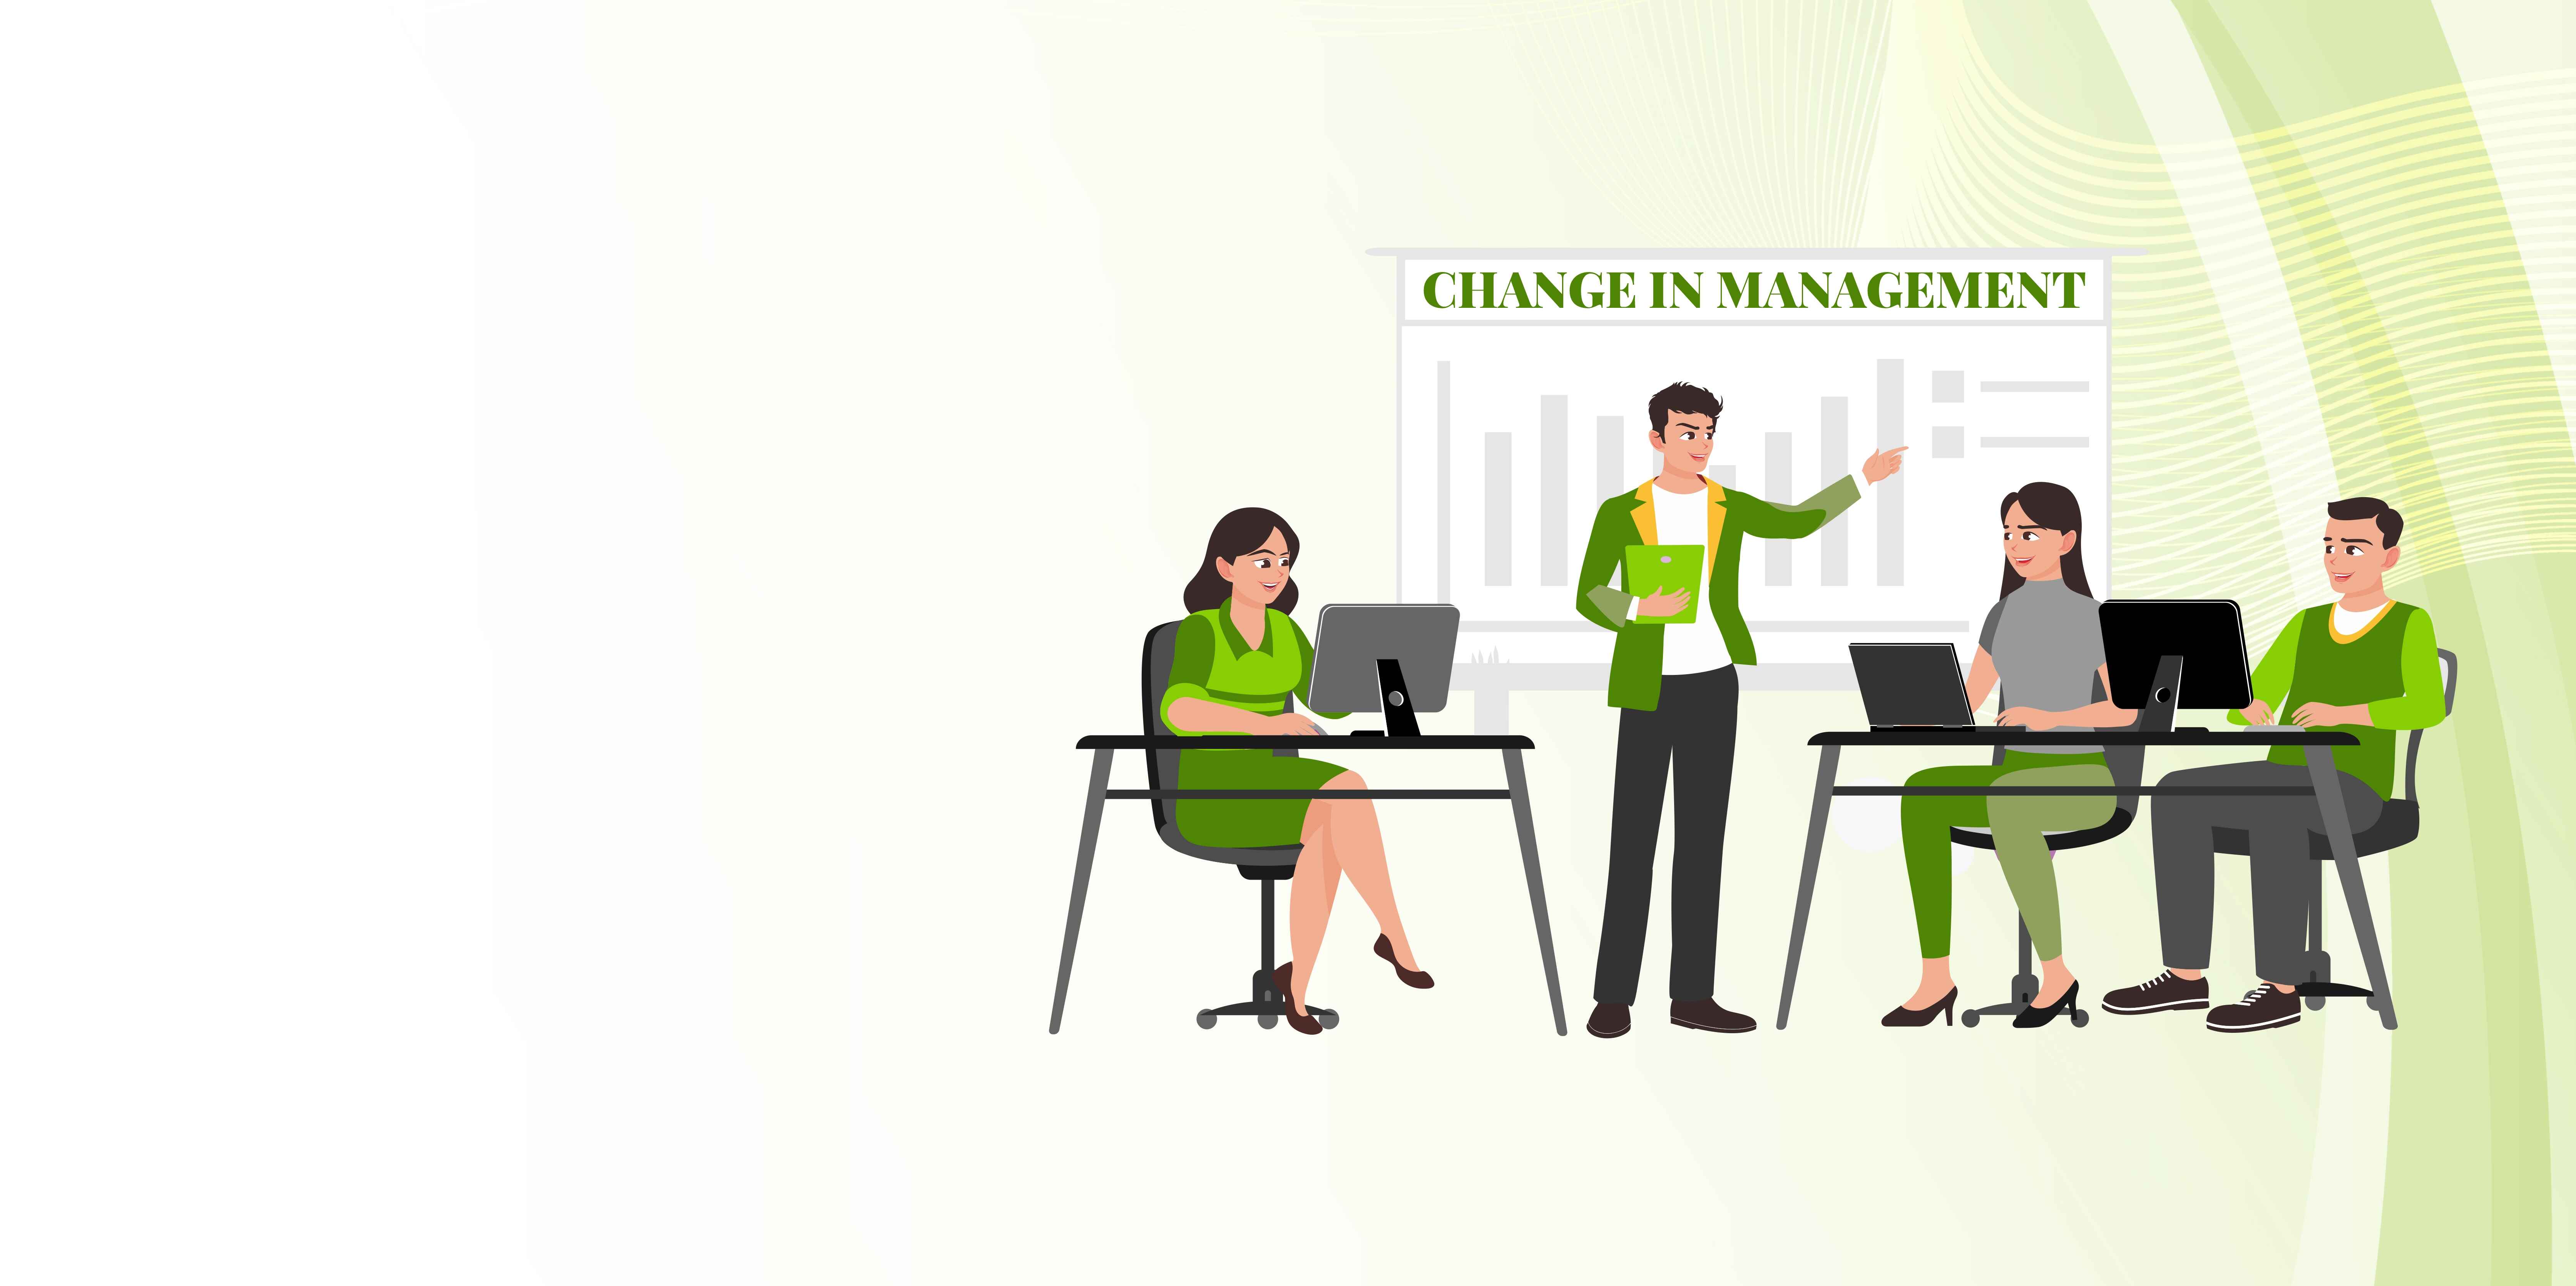 Change in Management